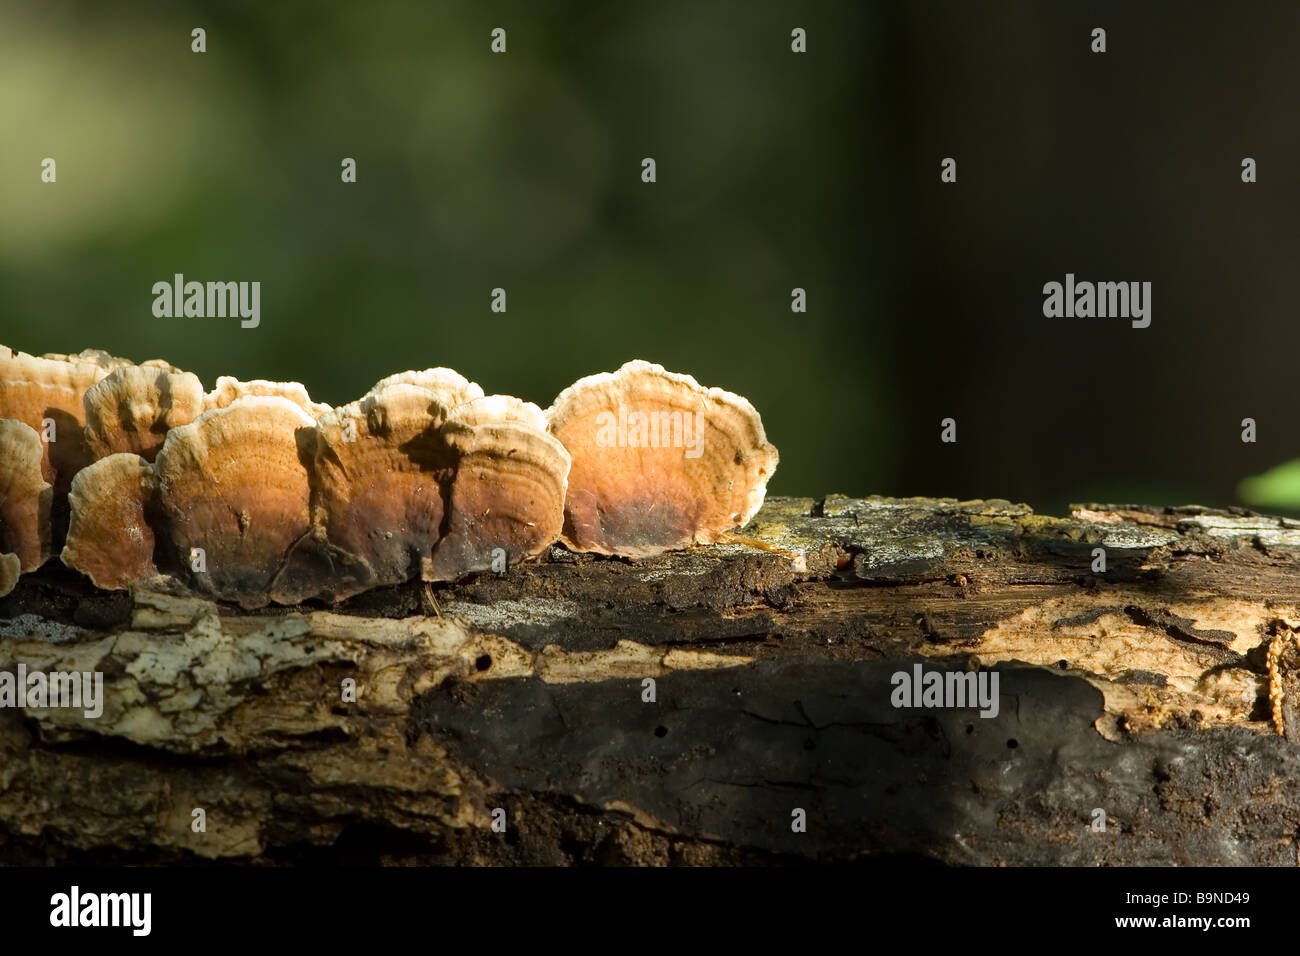 Fungus on a log Stock Photo